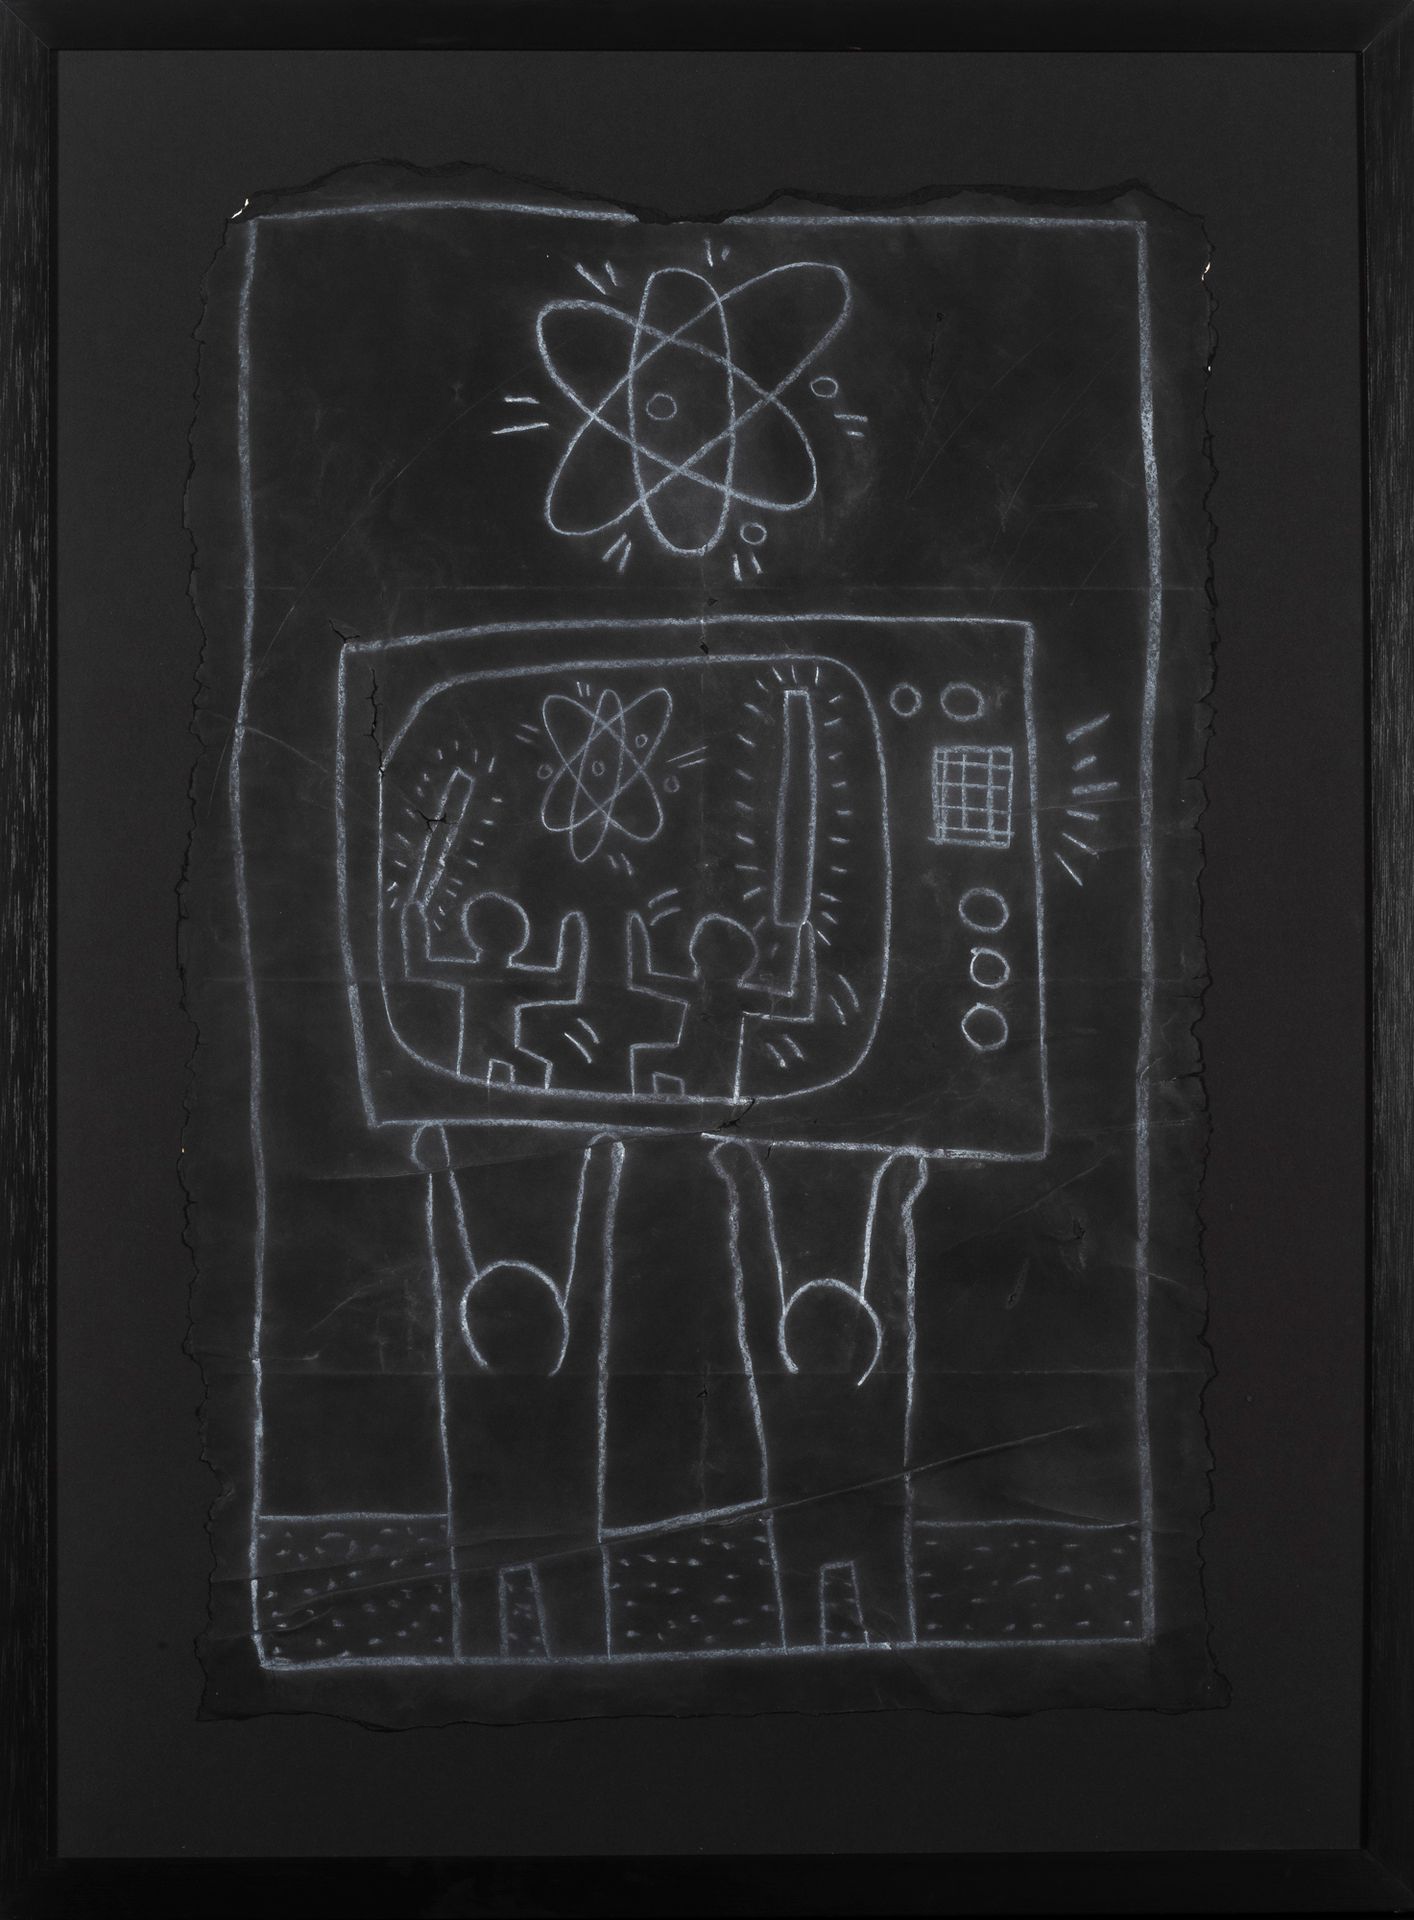 Keith Haring (1958-1990) Subway Drawing
Chalk on black paper.
Krijt op zwart pap&hellip;